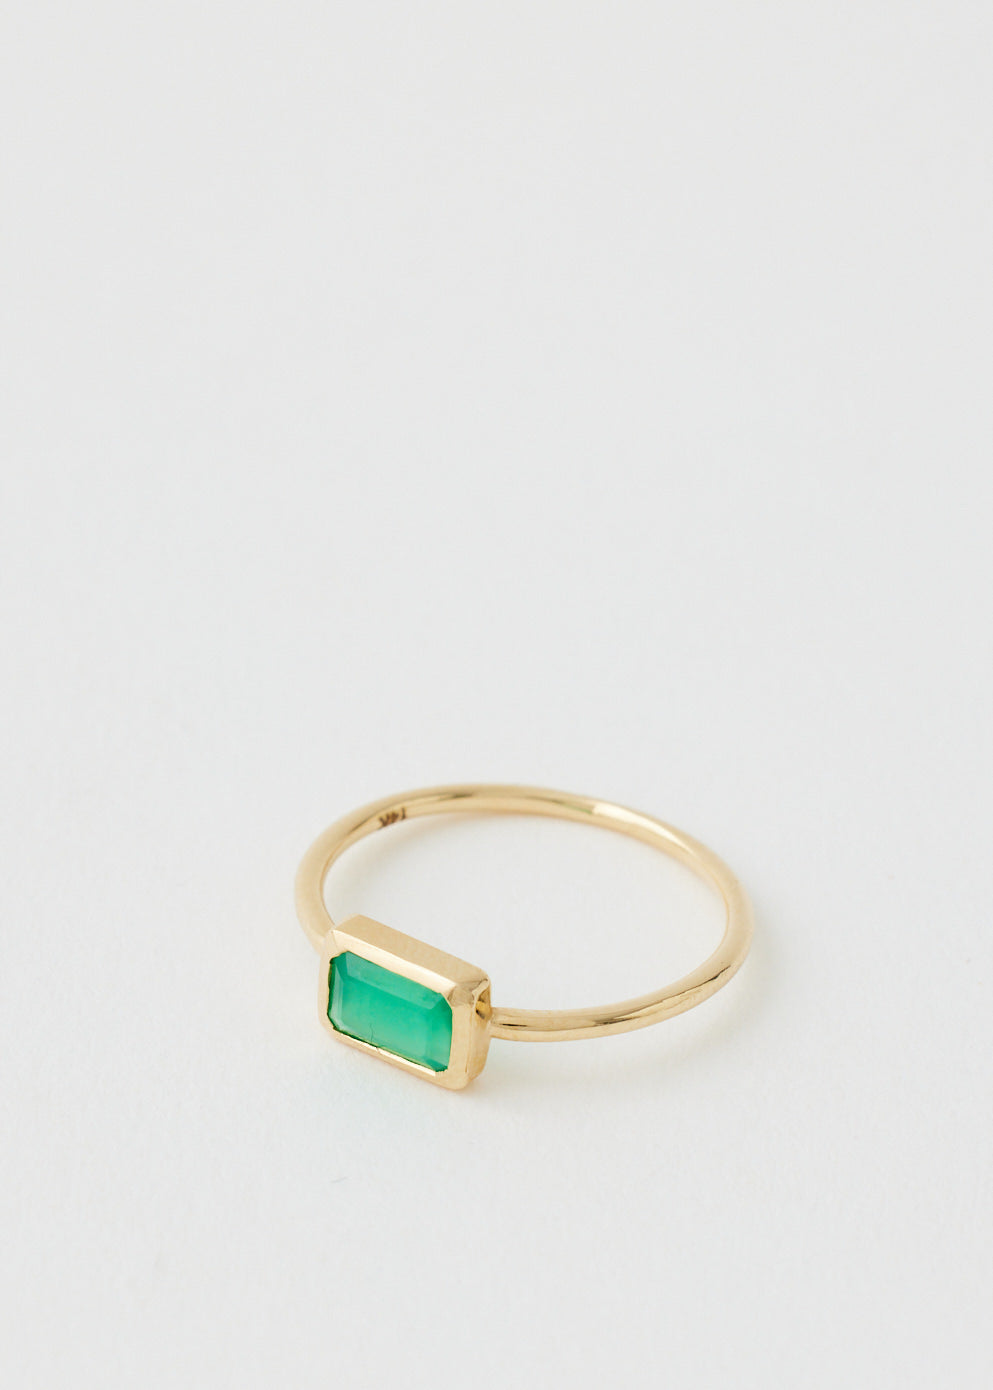 Emerald Cut Bezel Ring V.I